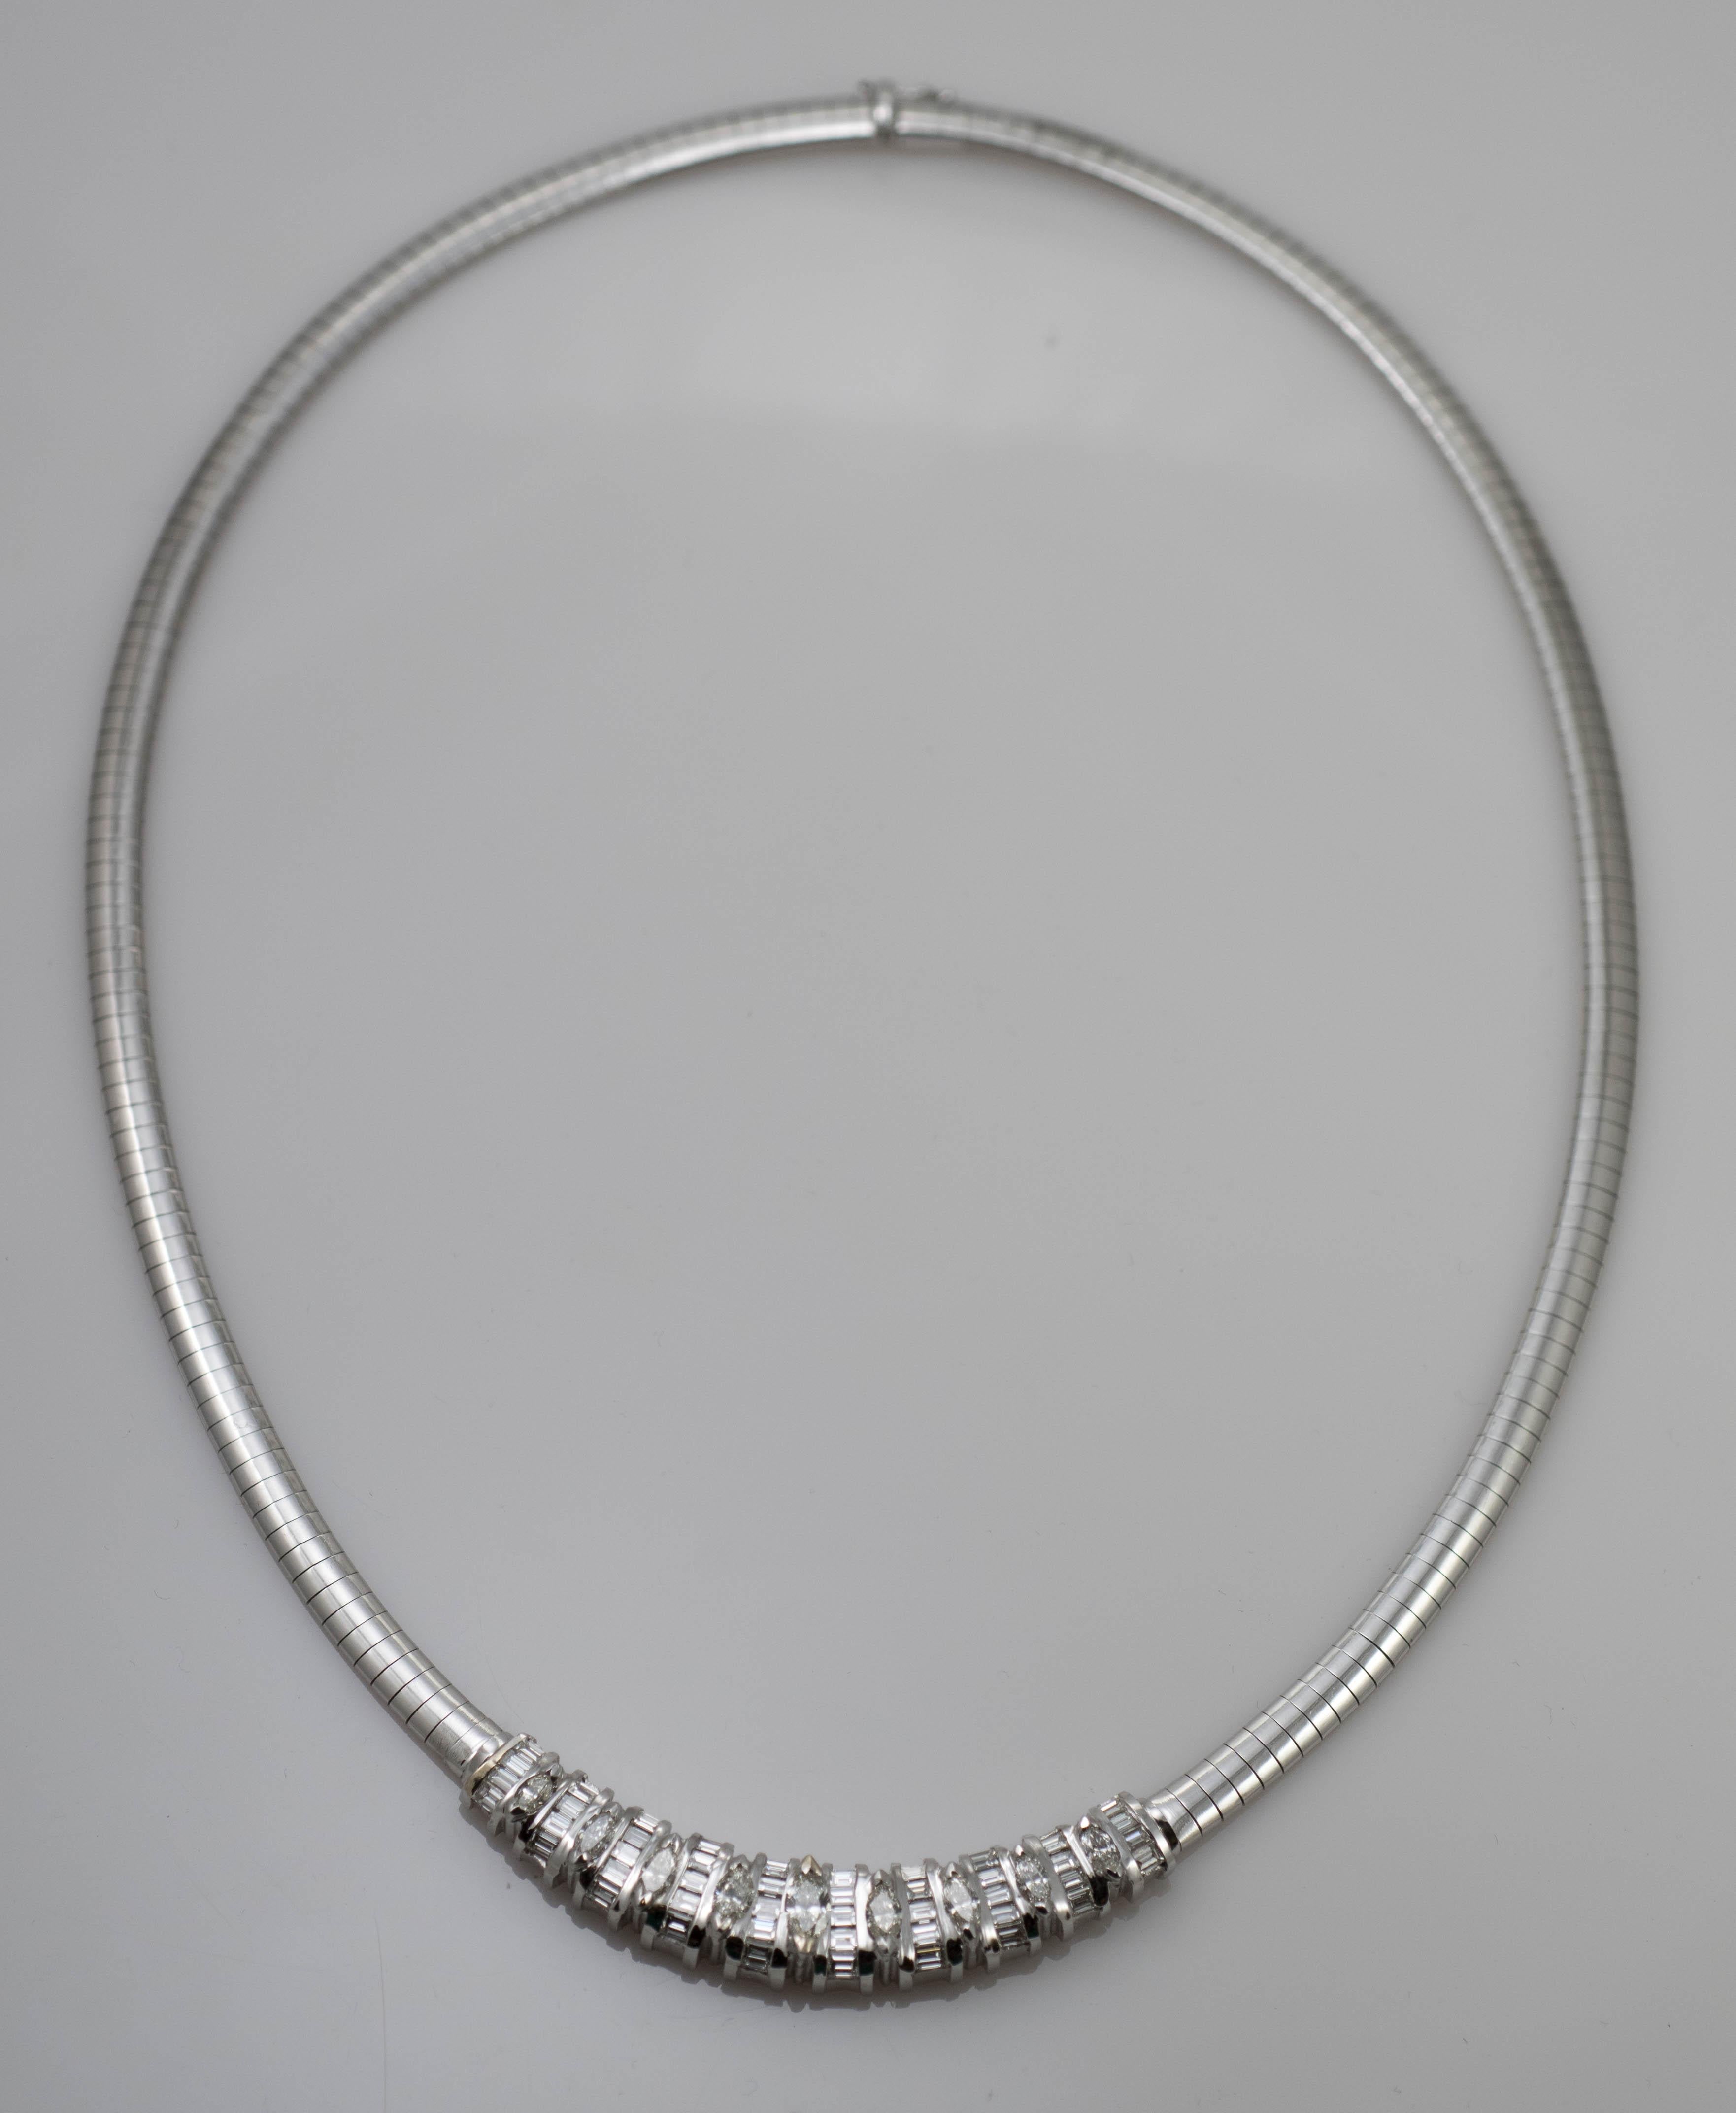 Marquise Cut Ladies Omega Necklace 14 Karat White Gold Diamonds 4.50 Total Diamond Weight